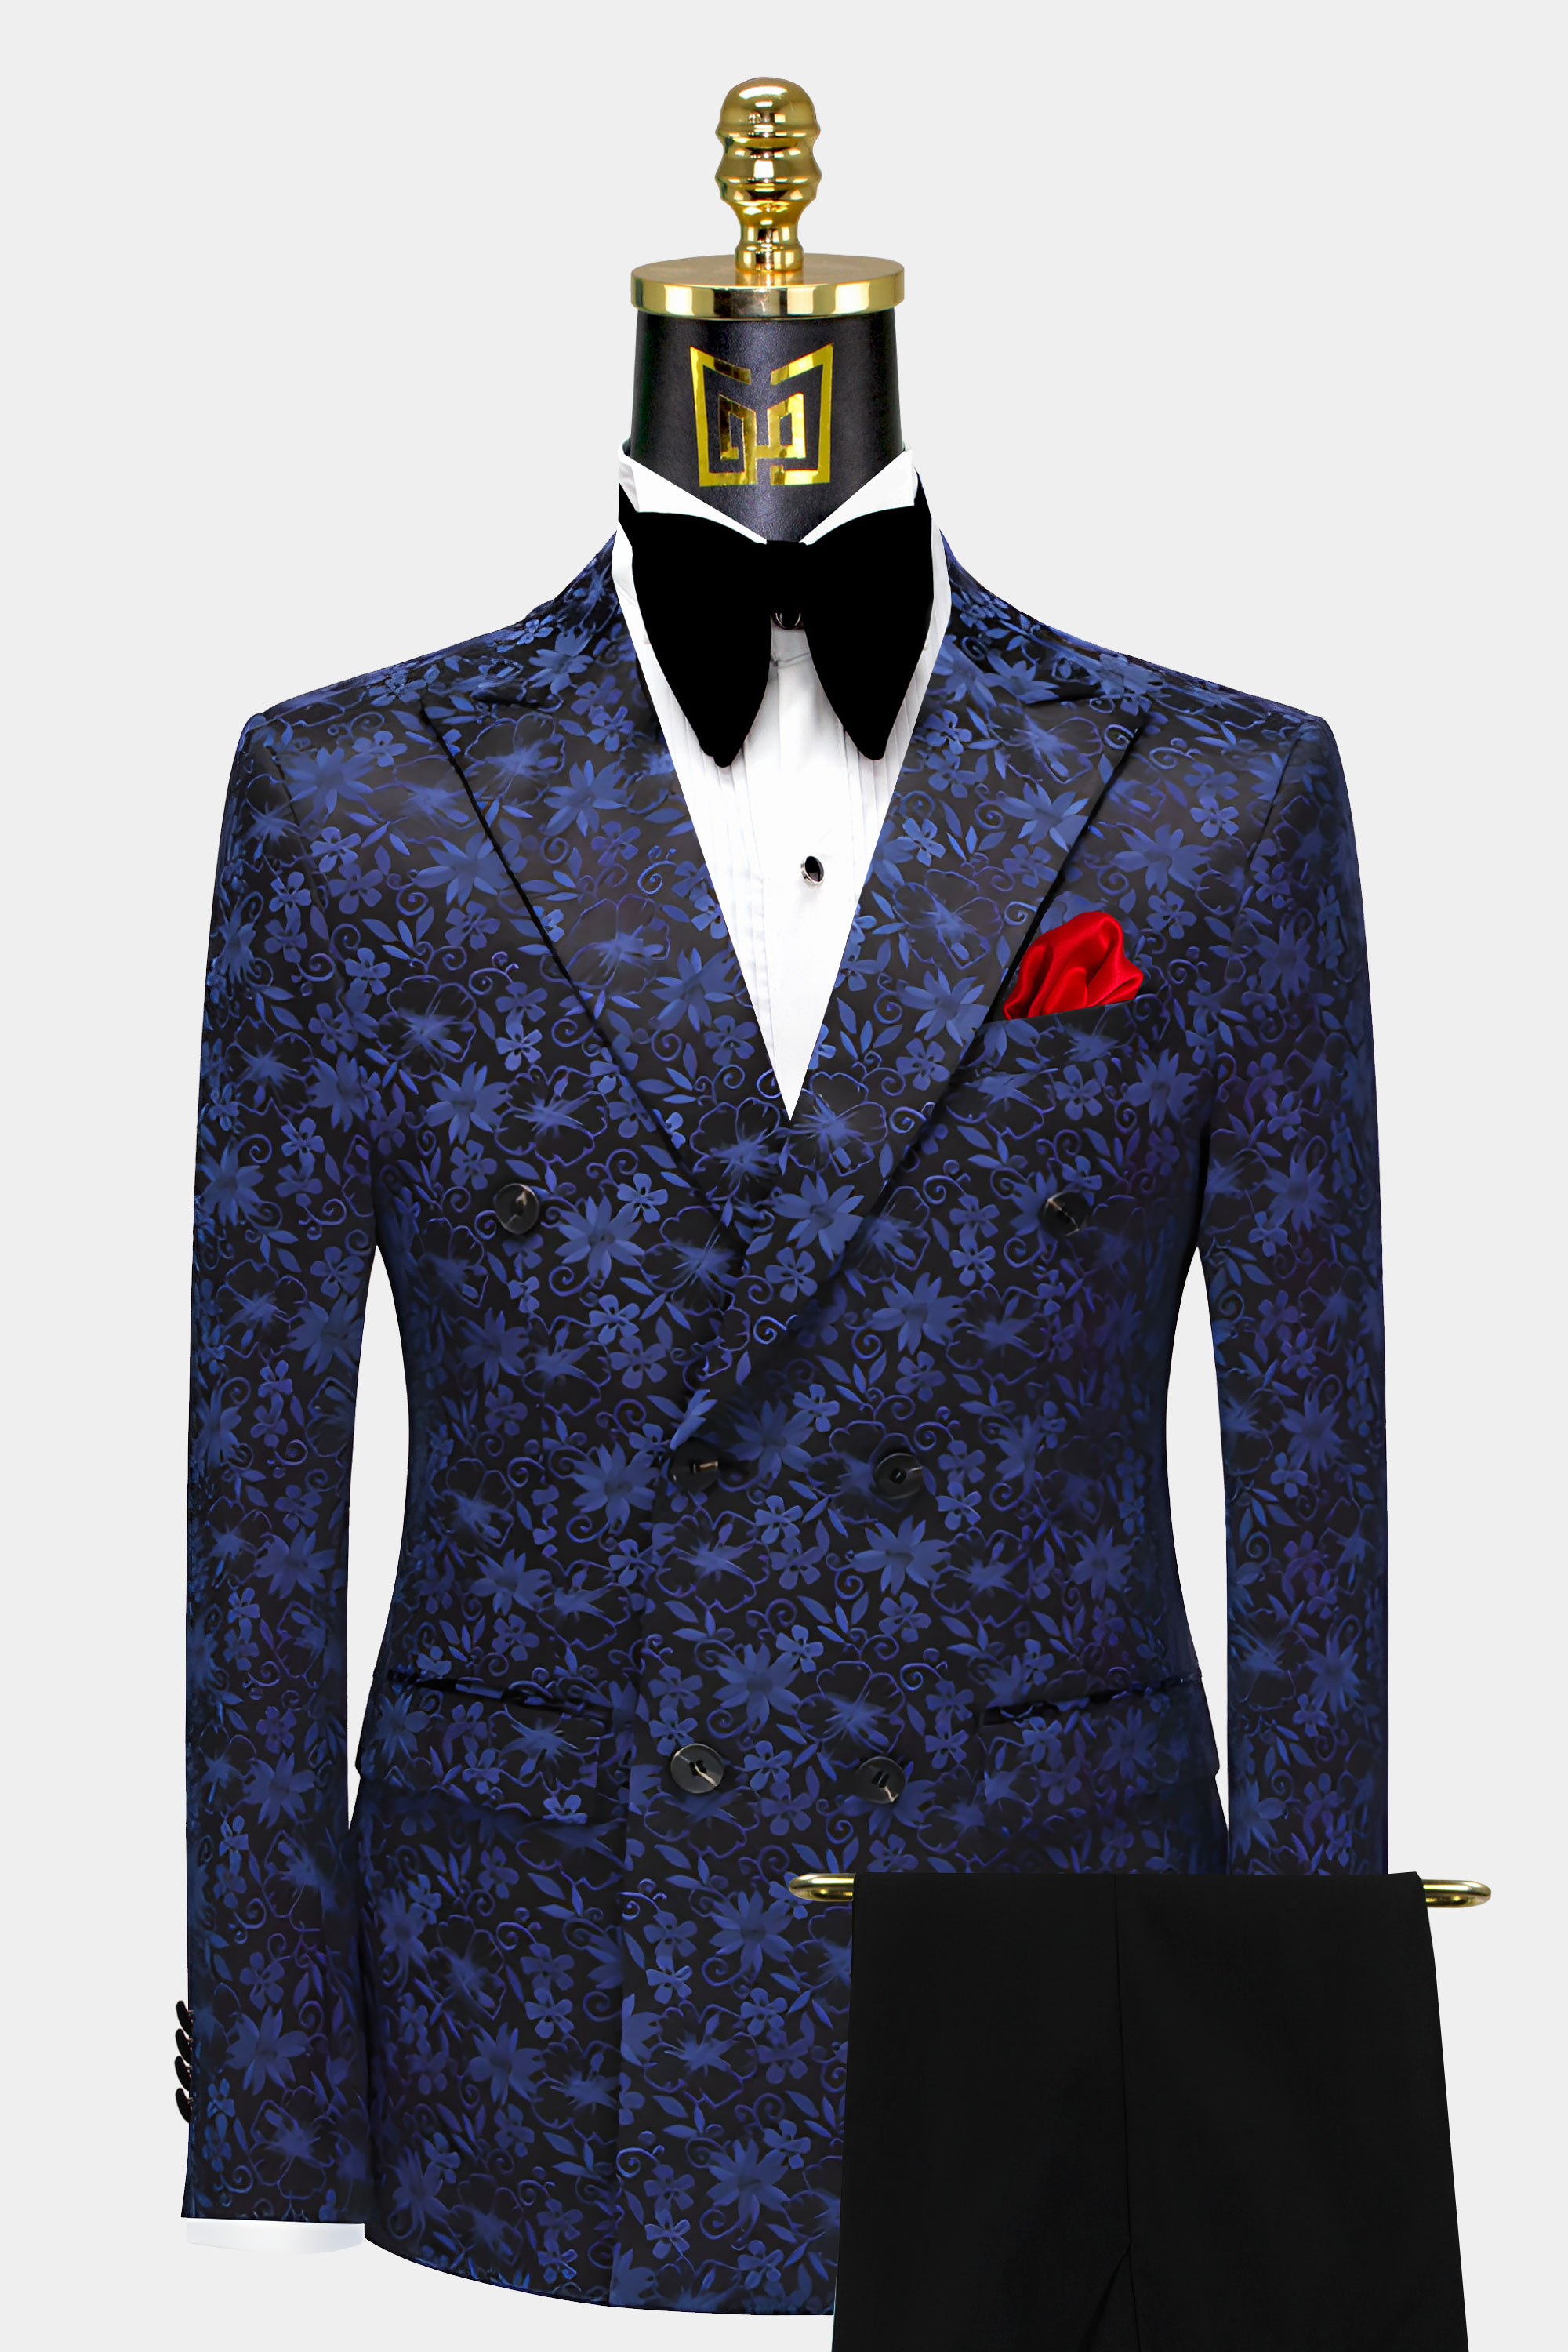 Daisy-Blue-and-Black-Floral-Suit-from-Gentlemansguru.com